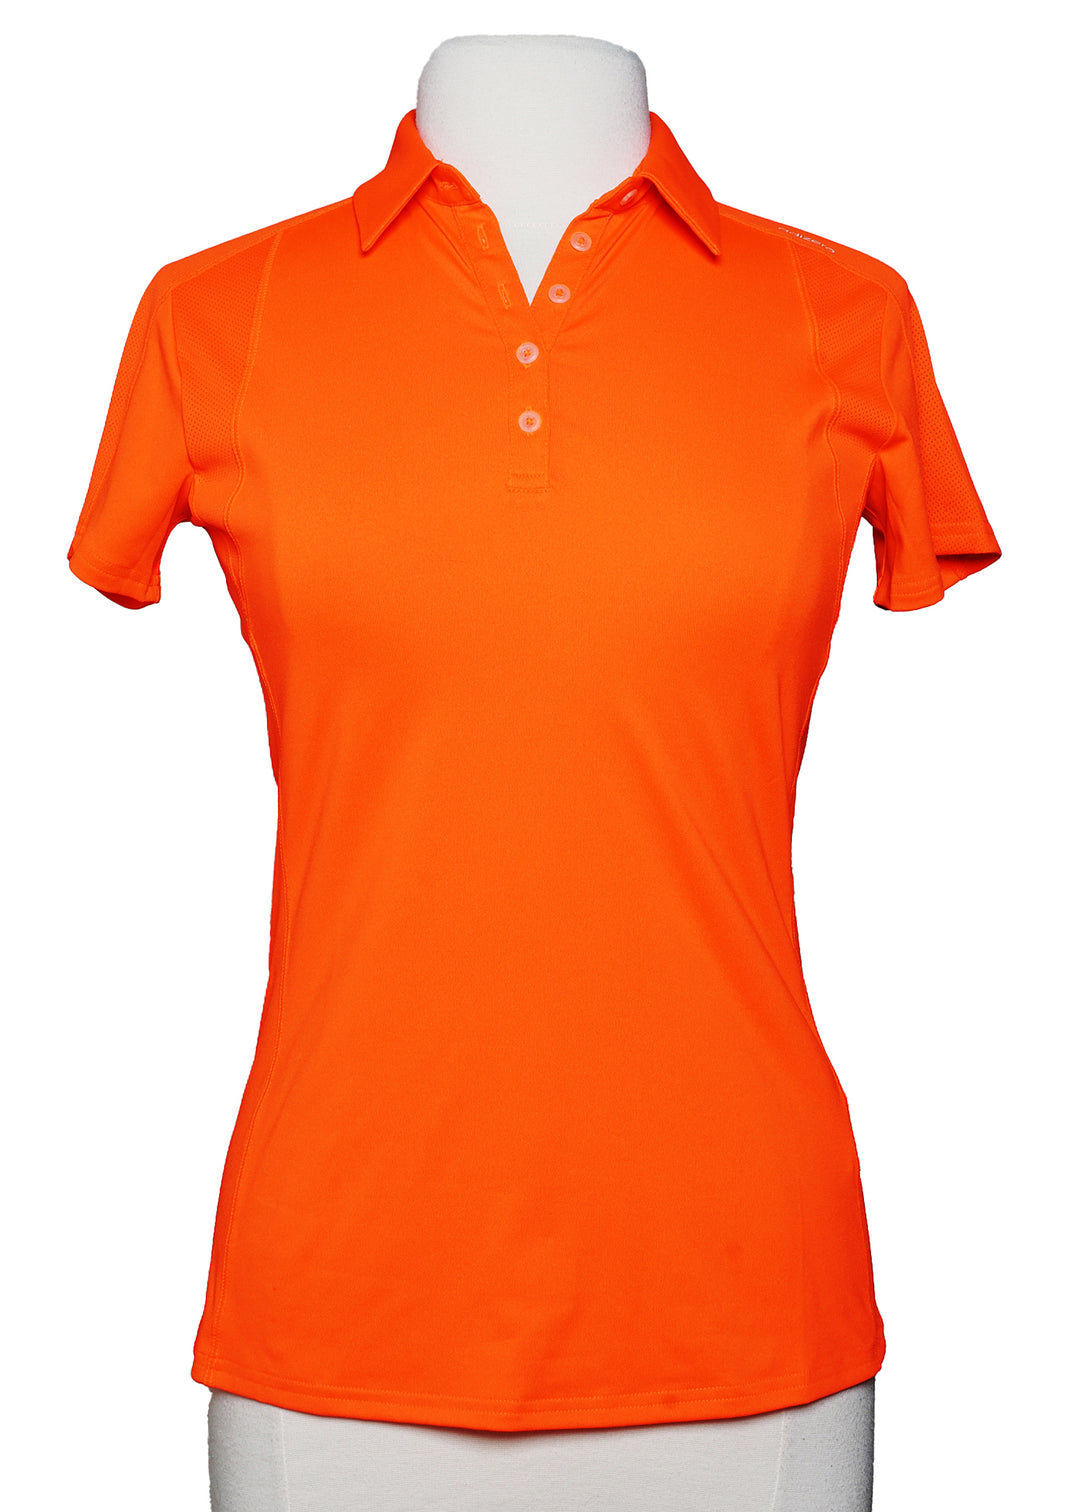 Adidas Golf Top - Orange -  Size Small - Skorzie